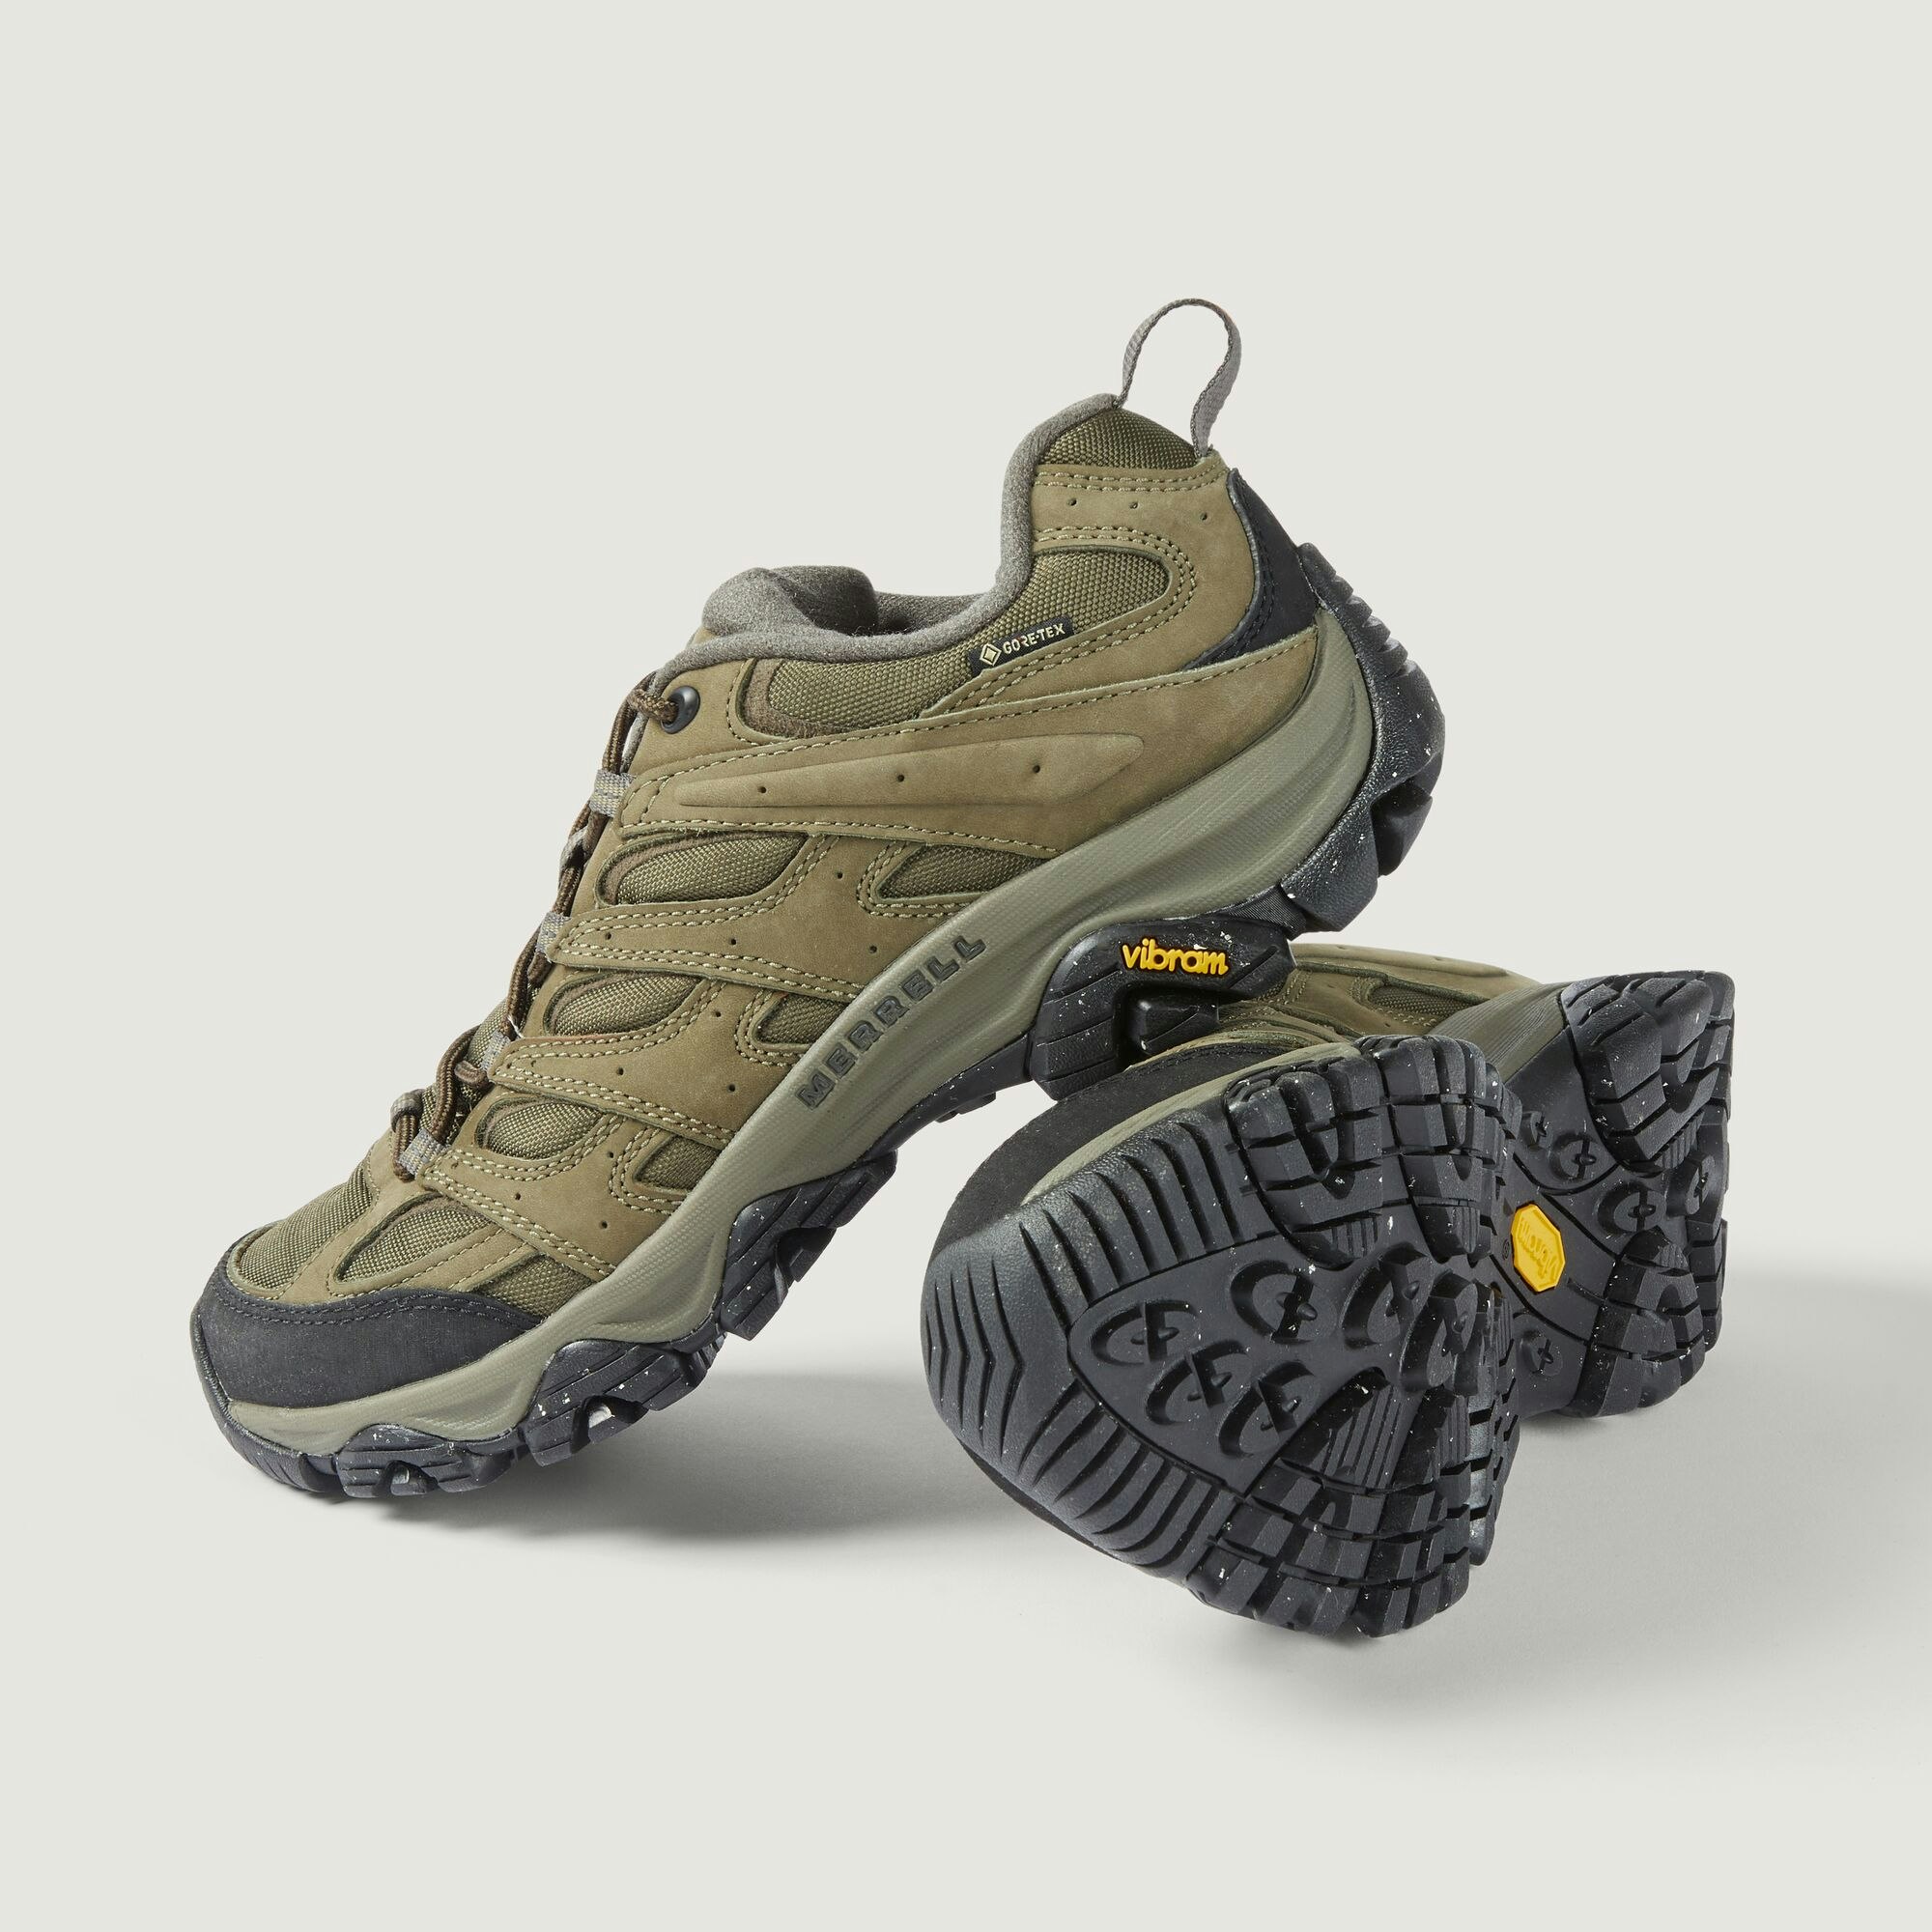 Moab 3 GORE-TEX Hiking Shoes - Men's